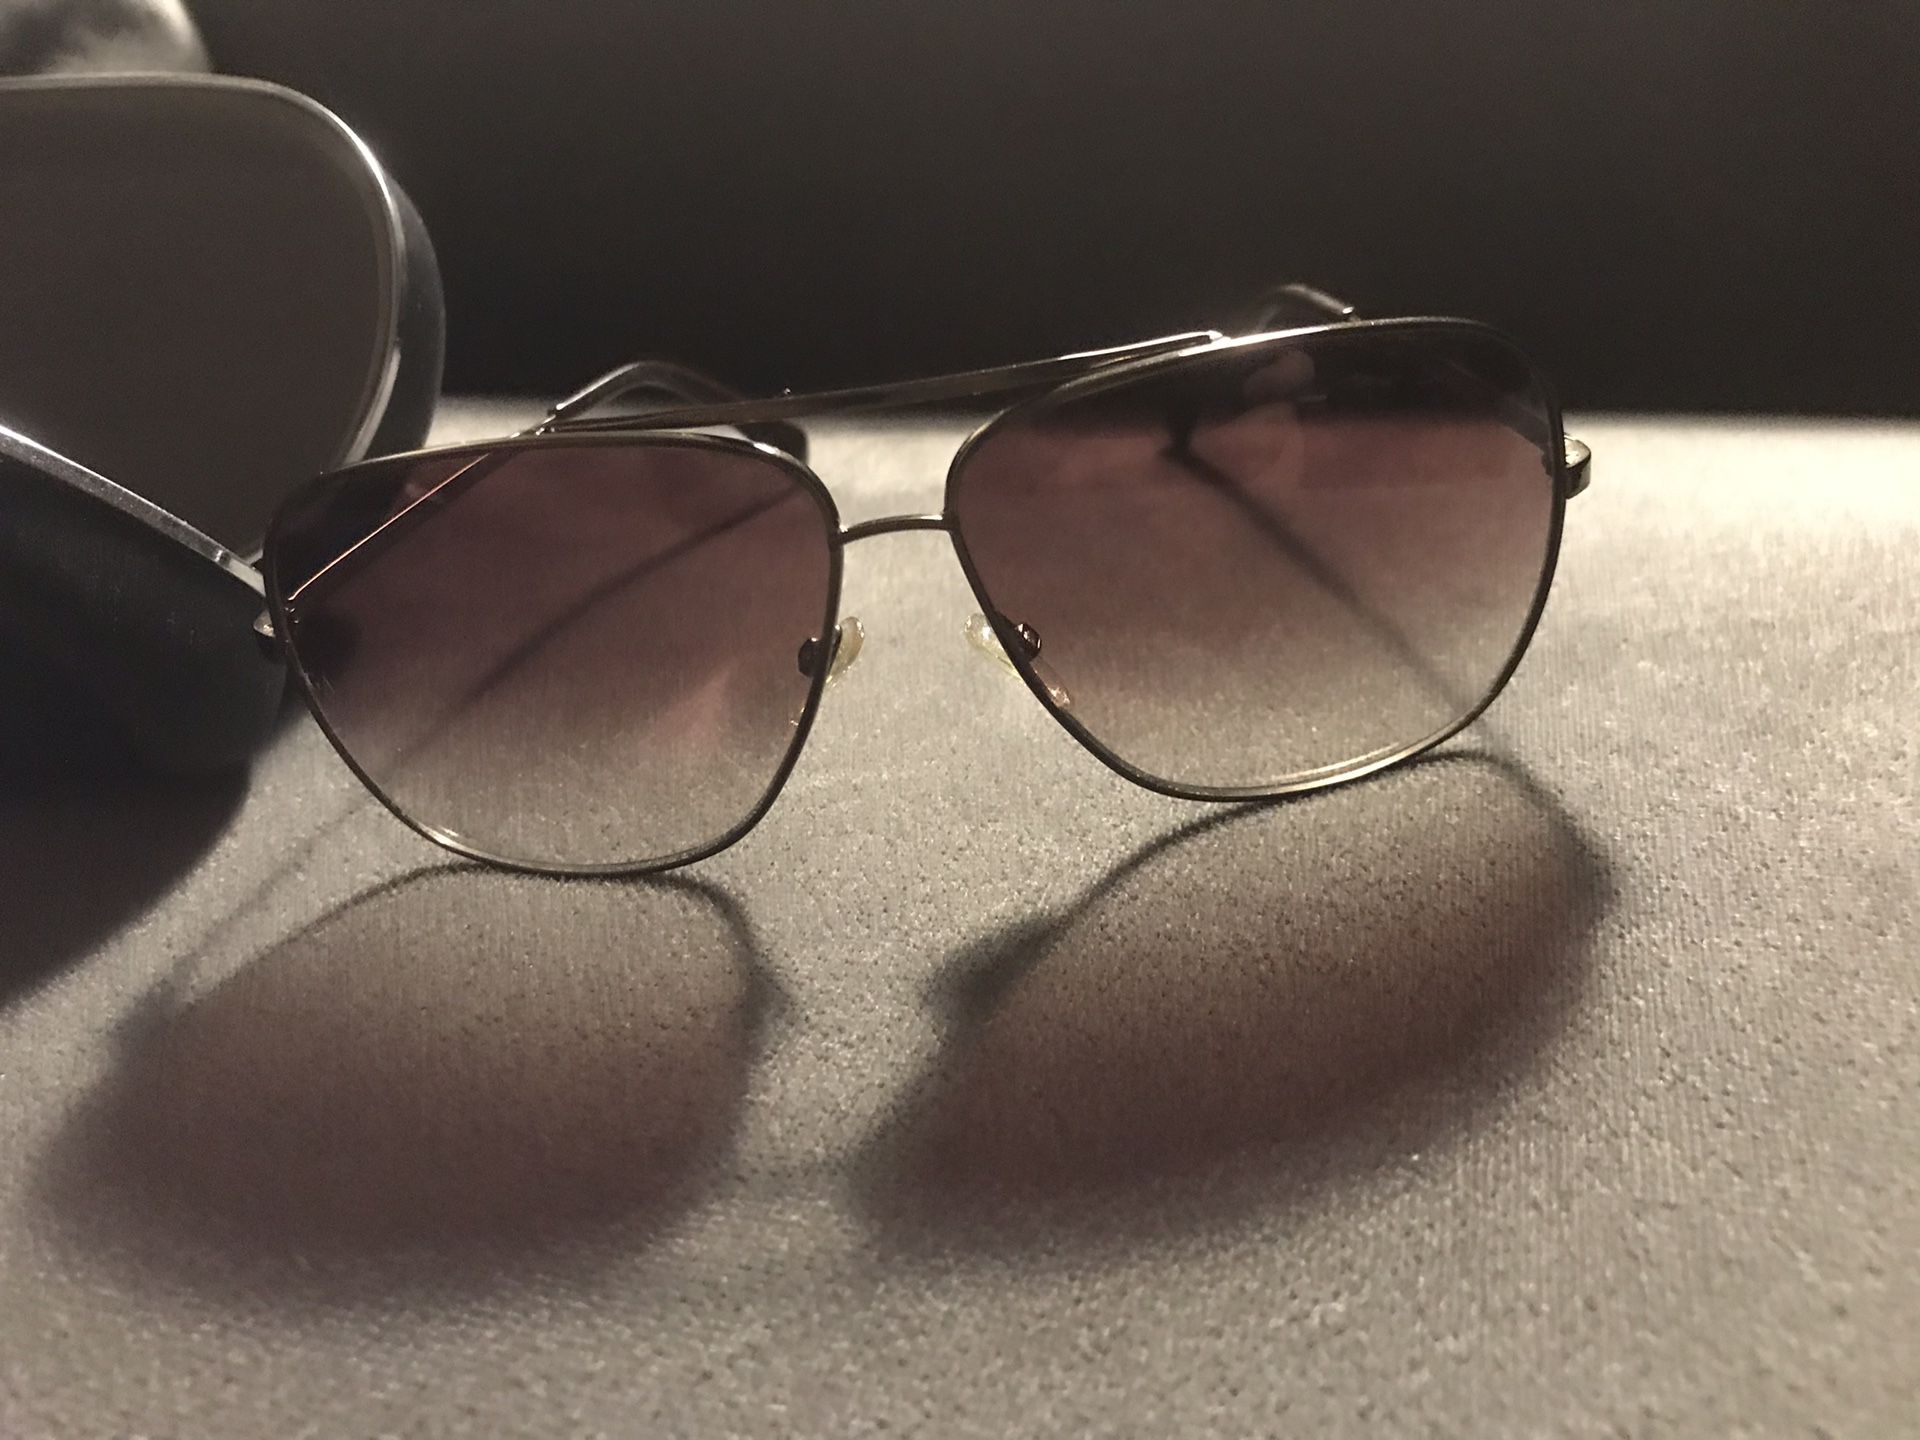 Georgio Armani 771 Sunglasses